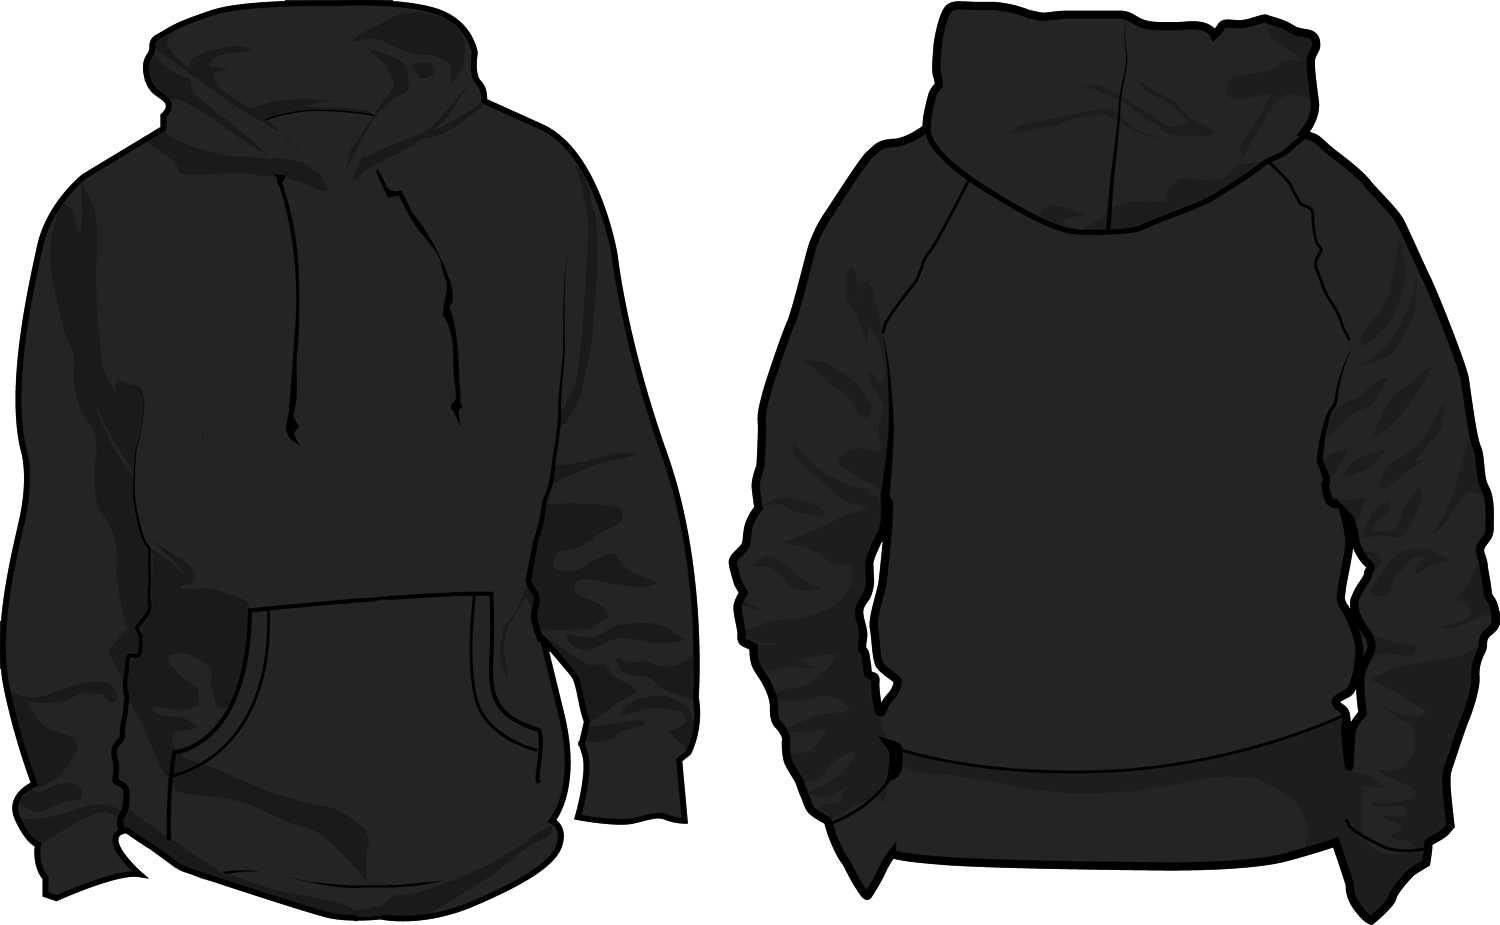 10 Pullover Hoodie Template Images - Black Blank Hoodie With Blank Black Hoodie Template